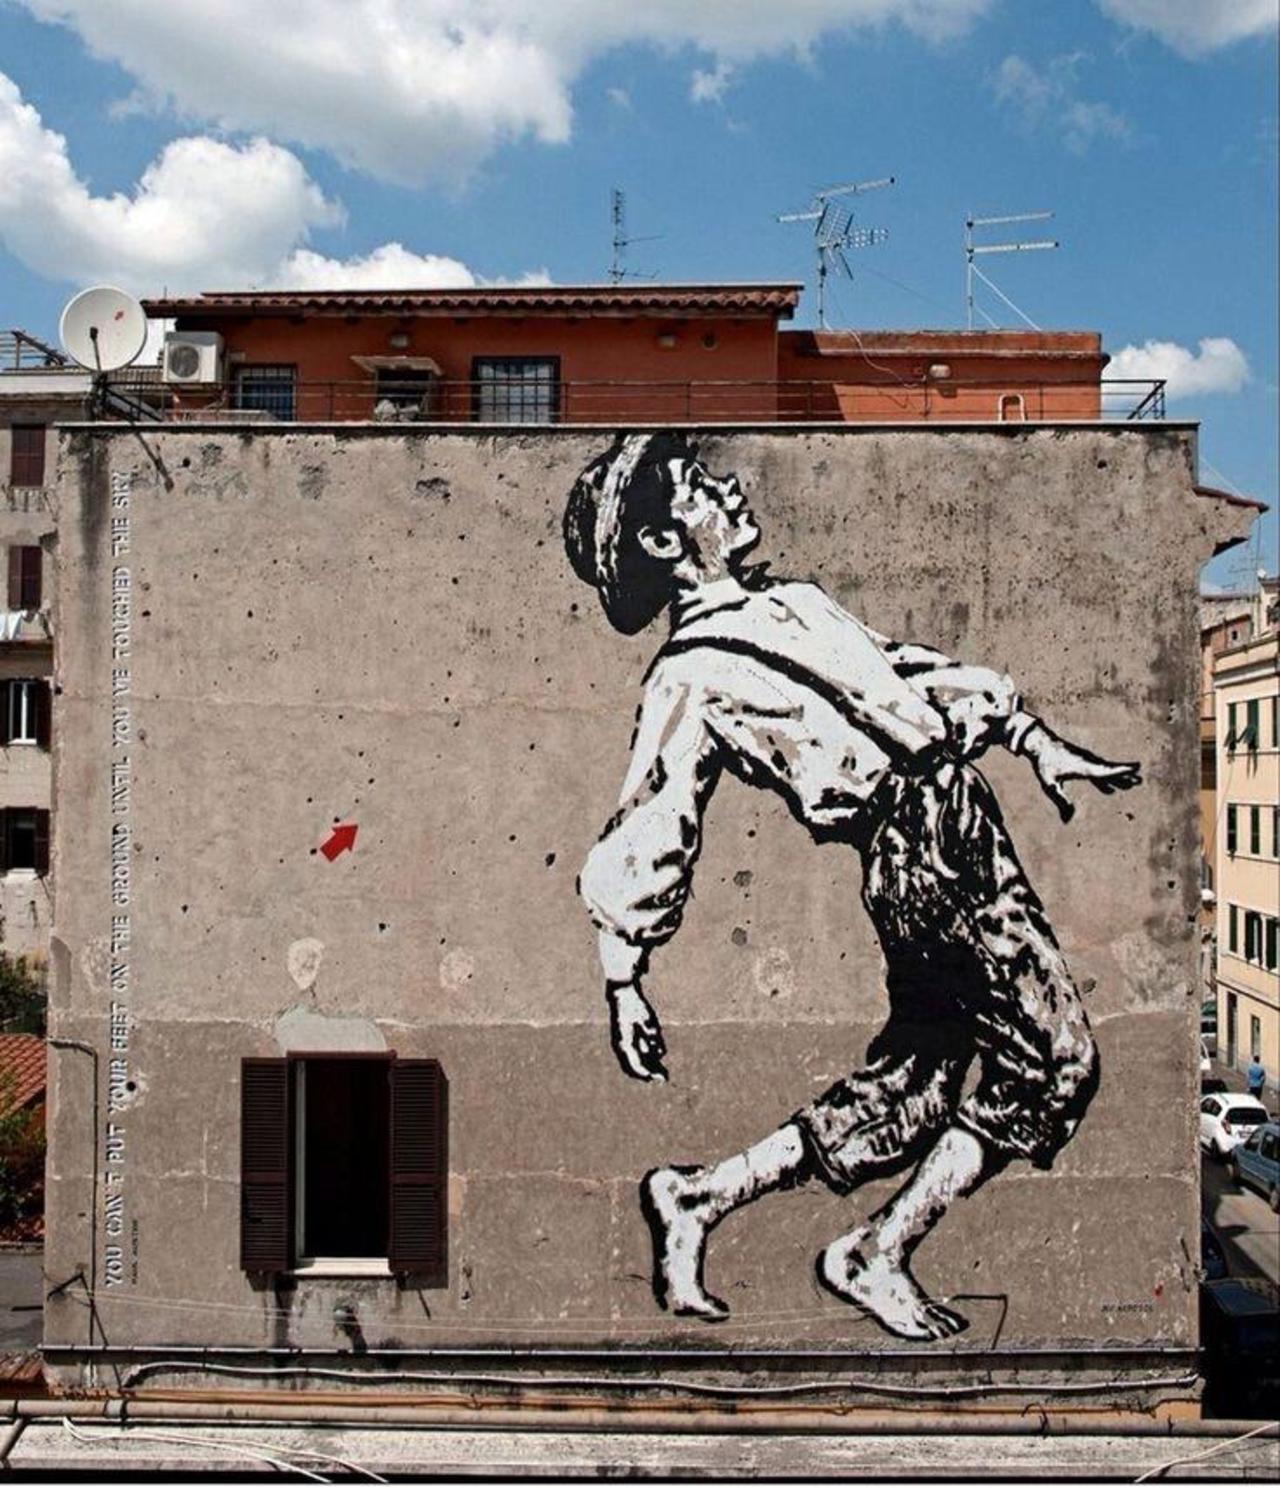 “@Pitchuskita: Jef Aerosol 
Rome, Italy 

#streetart #art #urbanart #graffiti http://t.co/icfMWLWw2H”